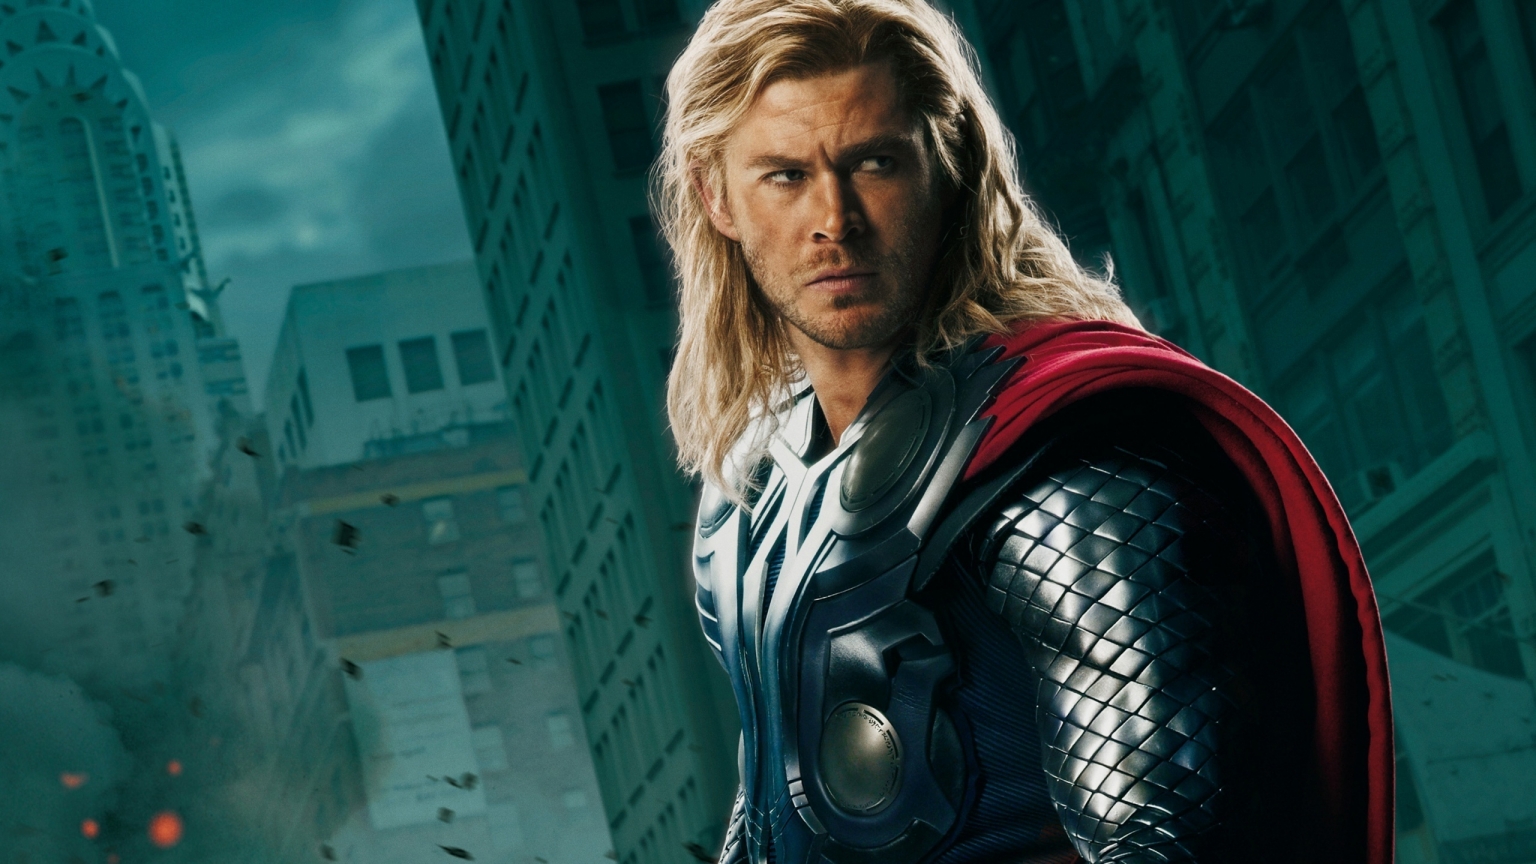 Thor The Avengers for 1536 x 864 HDTV resolution